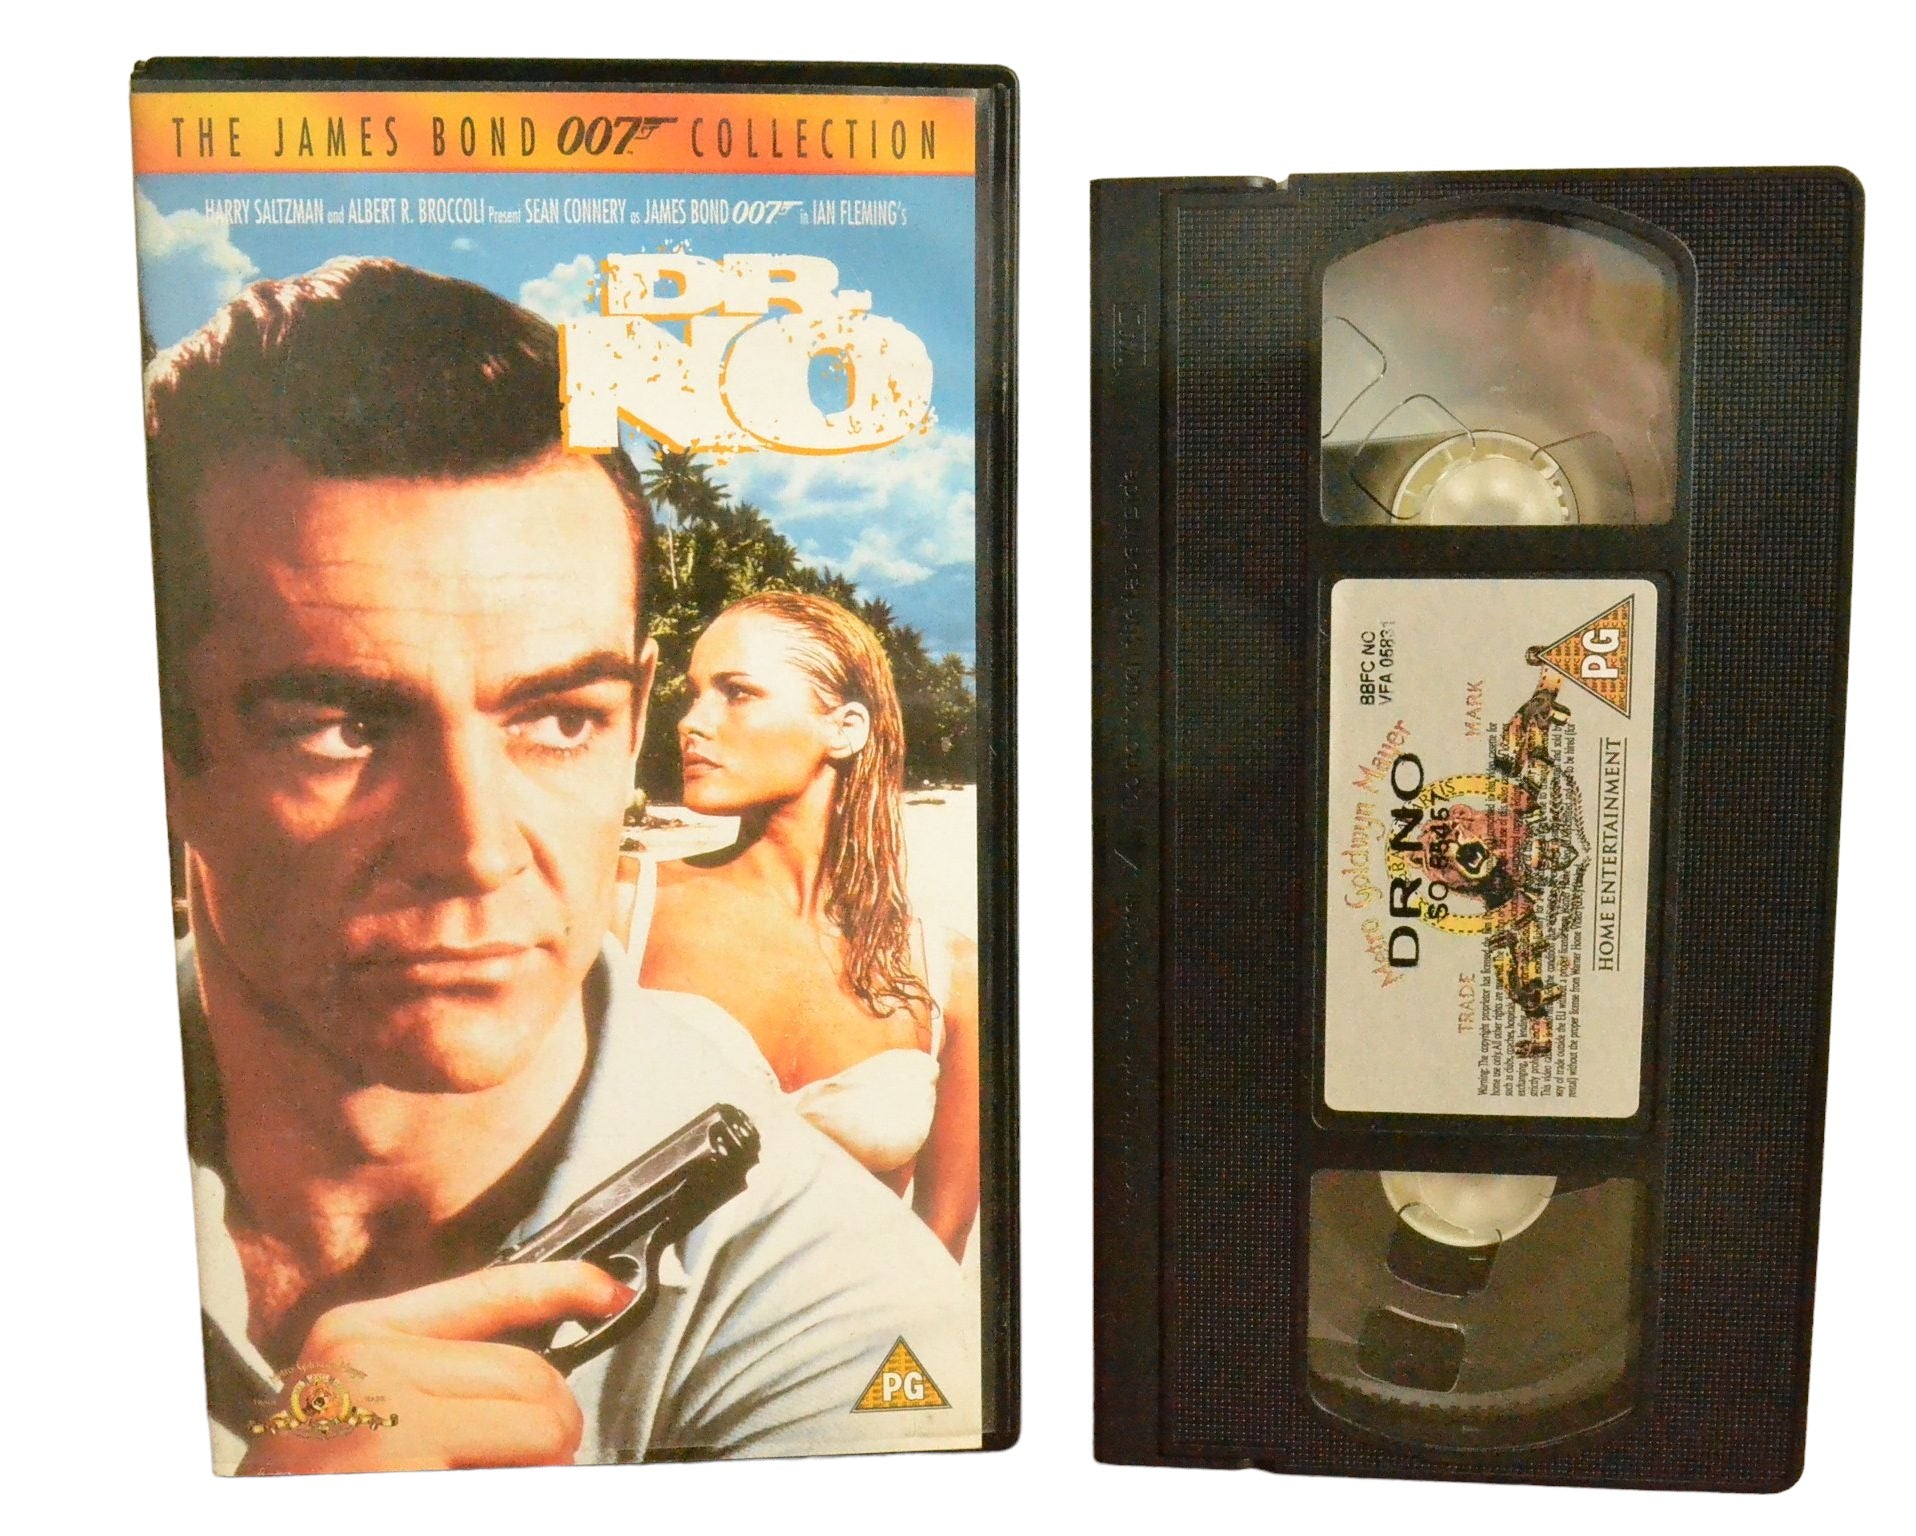 Dr No (The James Bond 007 Collection) - Sean Connery - Metro Goldwyn Mayer - SO55457 - Action - Pal - VHS-